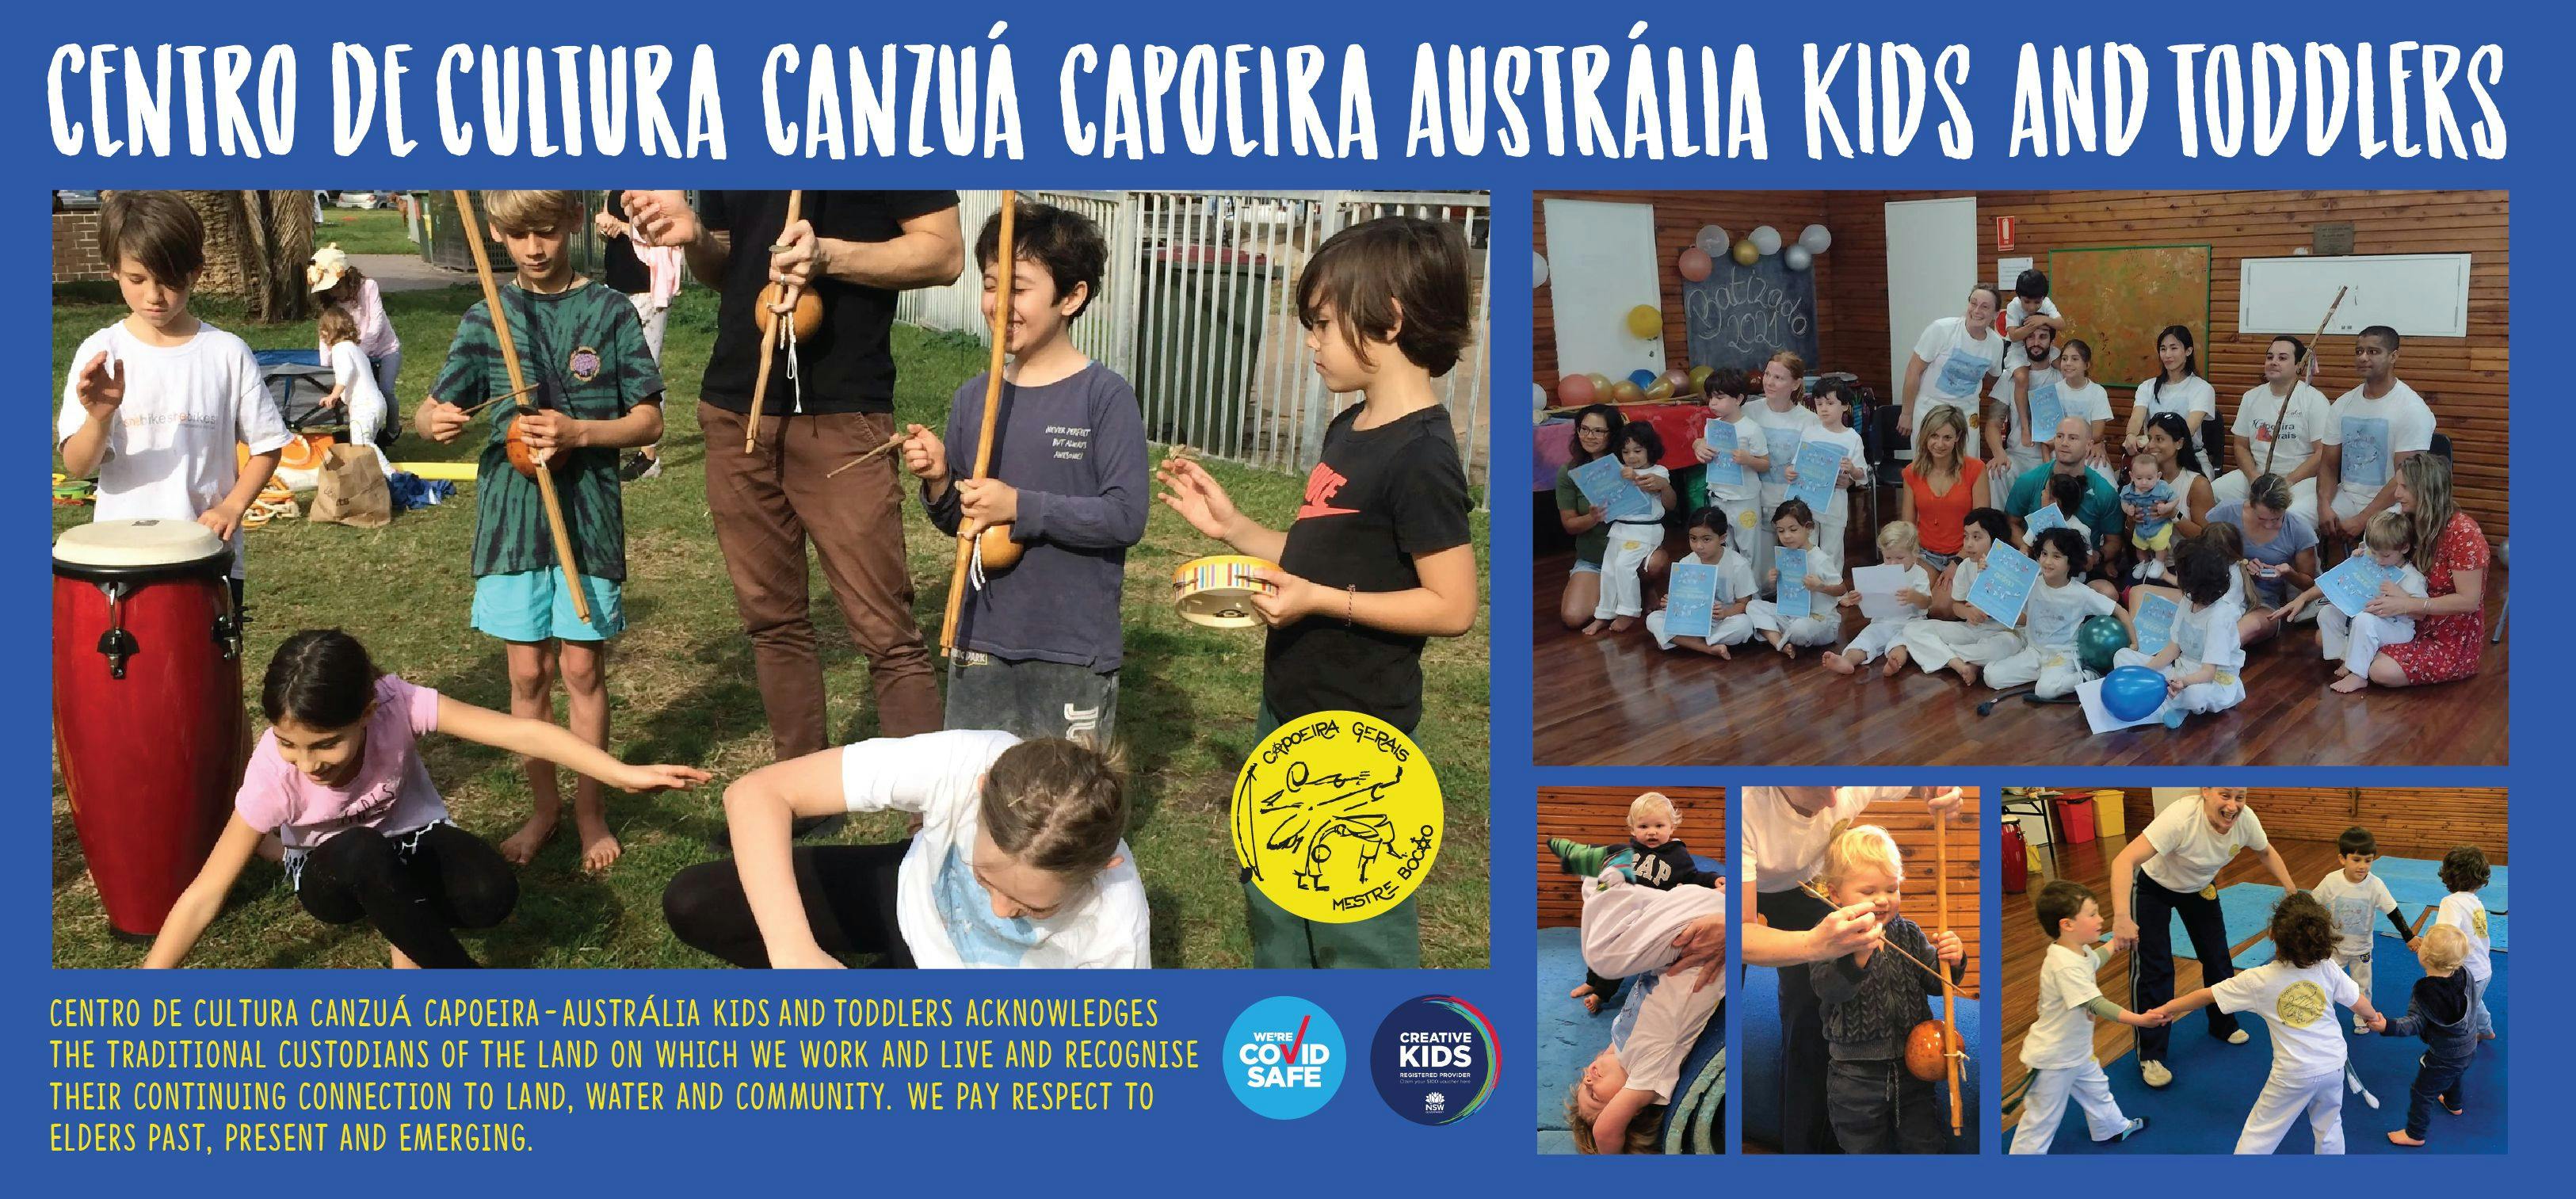 Centro de Cultura Canzua Capoeira - Australia Kids and Toddlers 